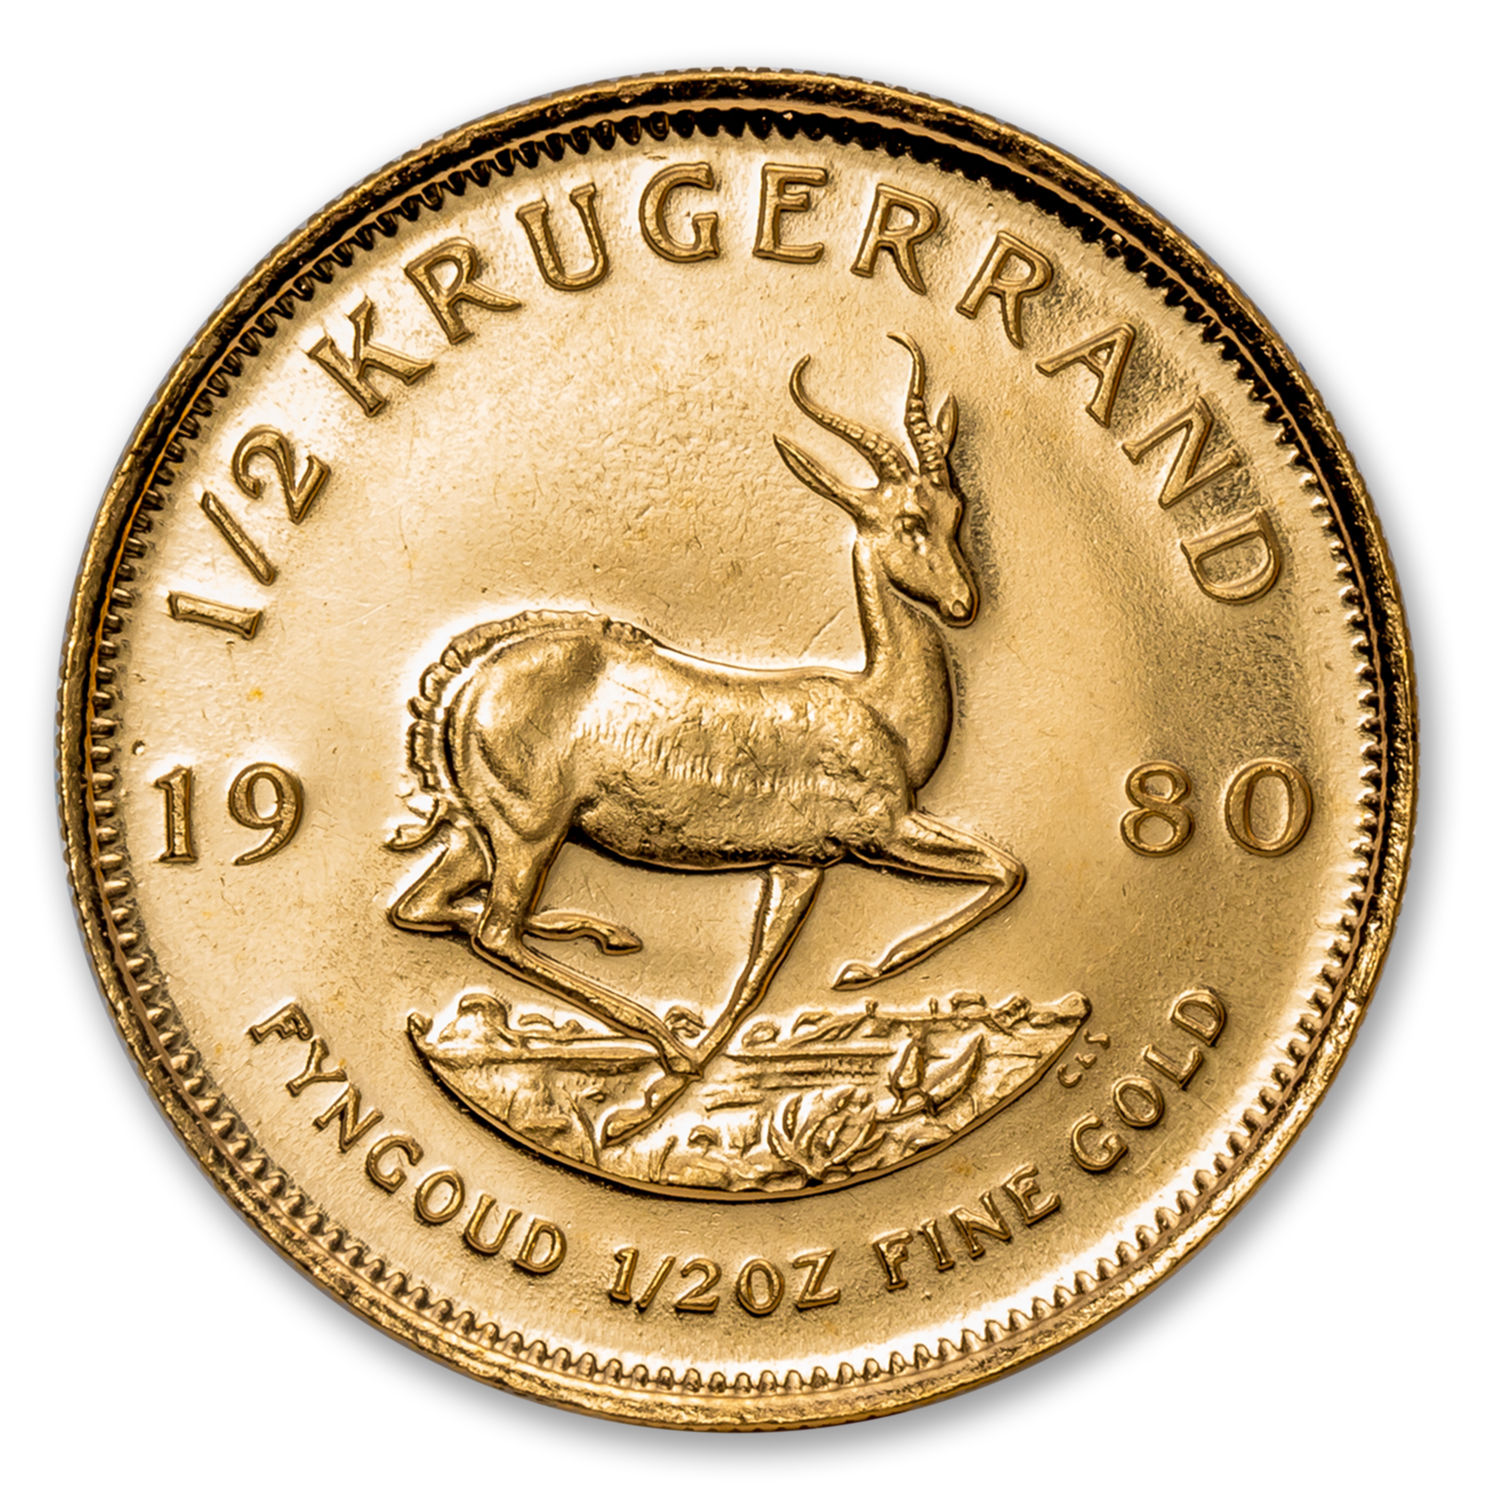 1980 South Africa 1/2 oz Gold Krugerrand BU - SKU #88135